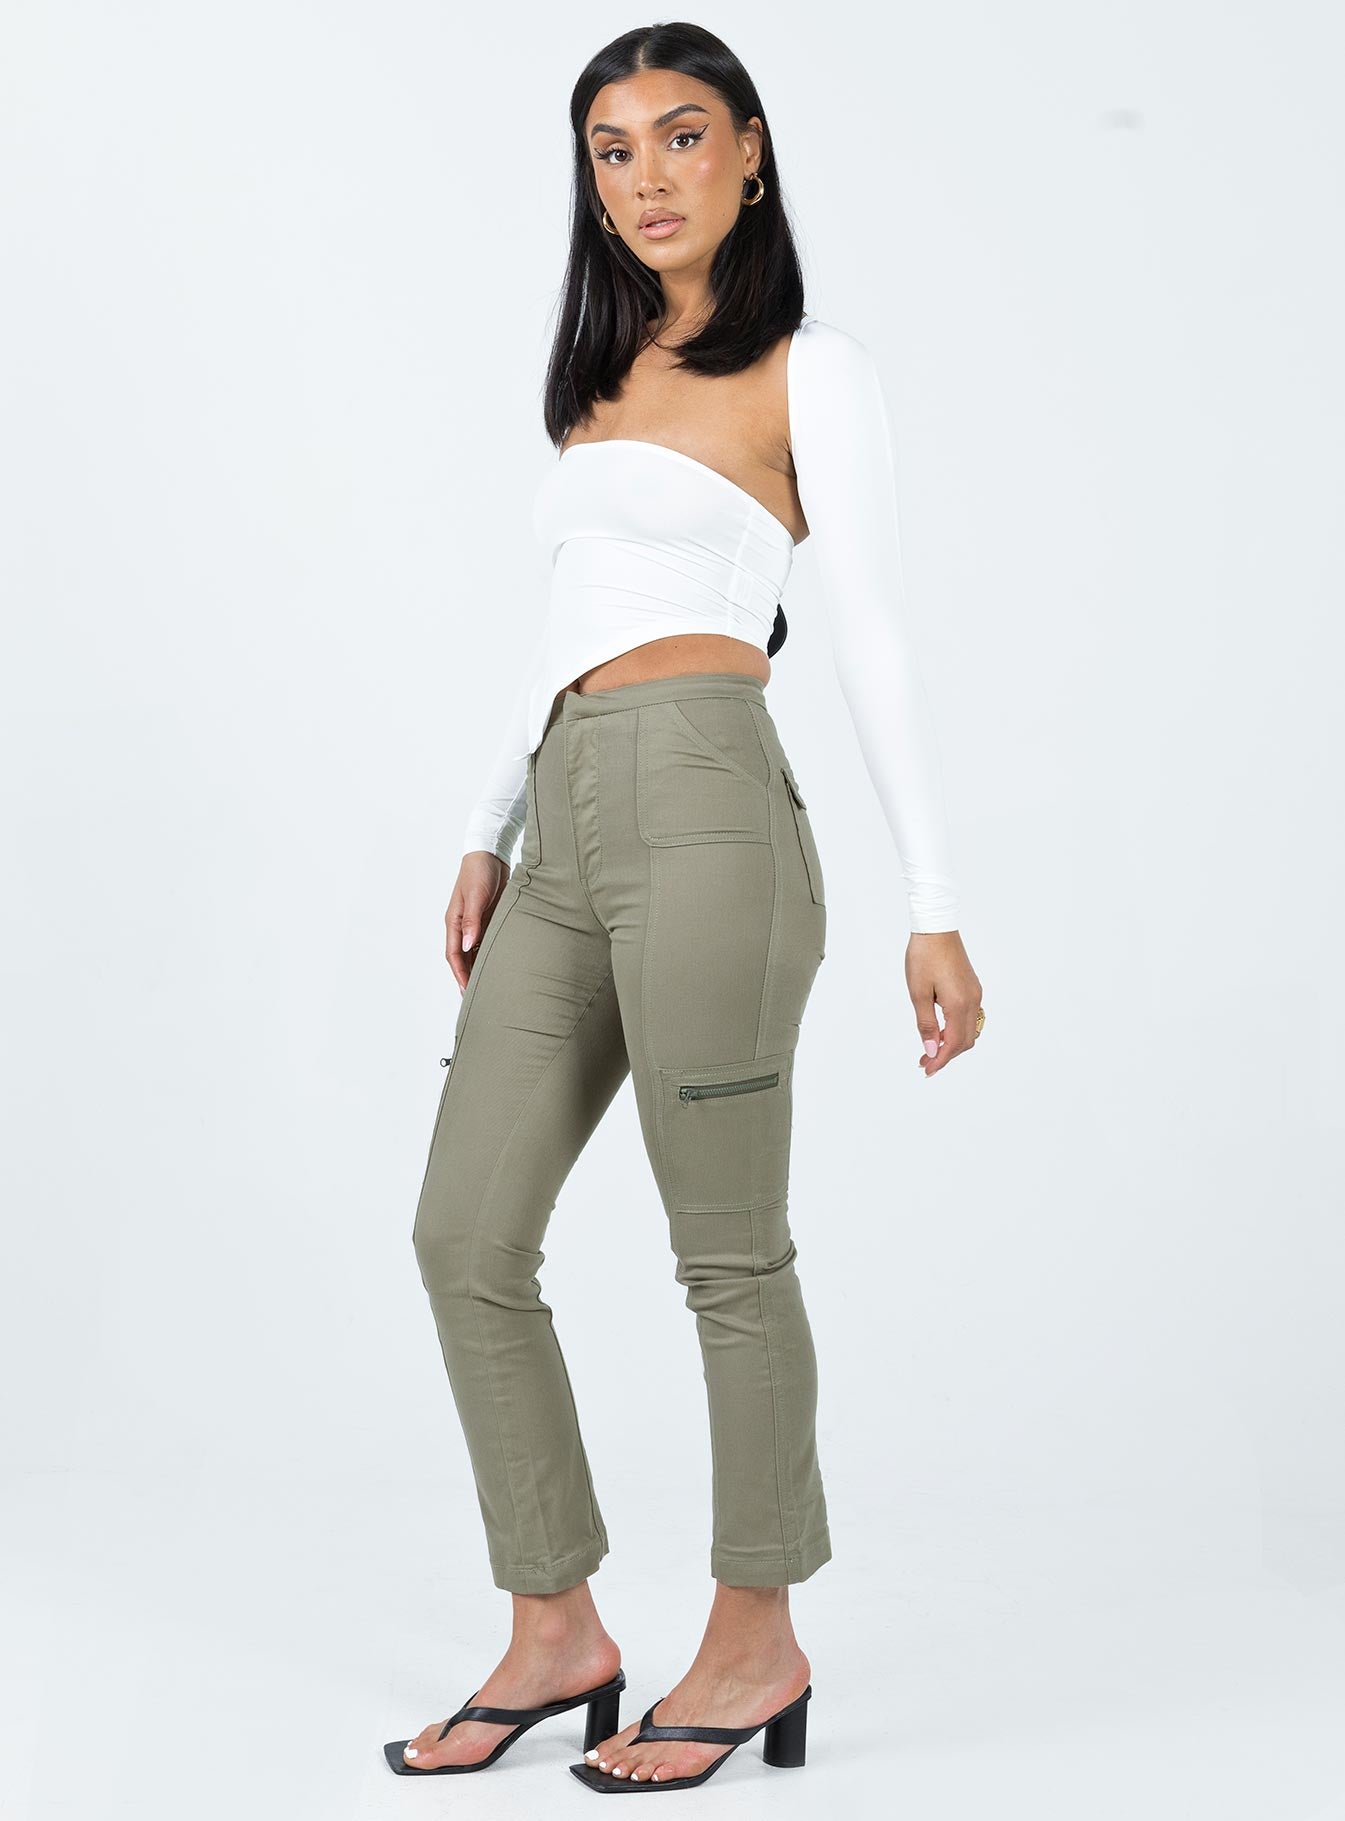 Vero Moda Bottoms Pants and Trousers  Buy Vero Moda High Waisted Cargo  Pocket Pants Online  Nykaa Fashion